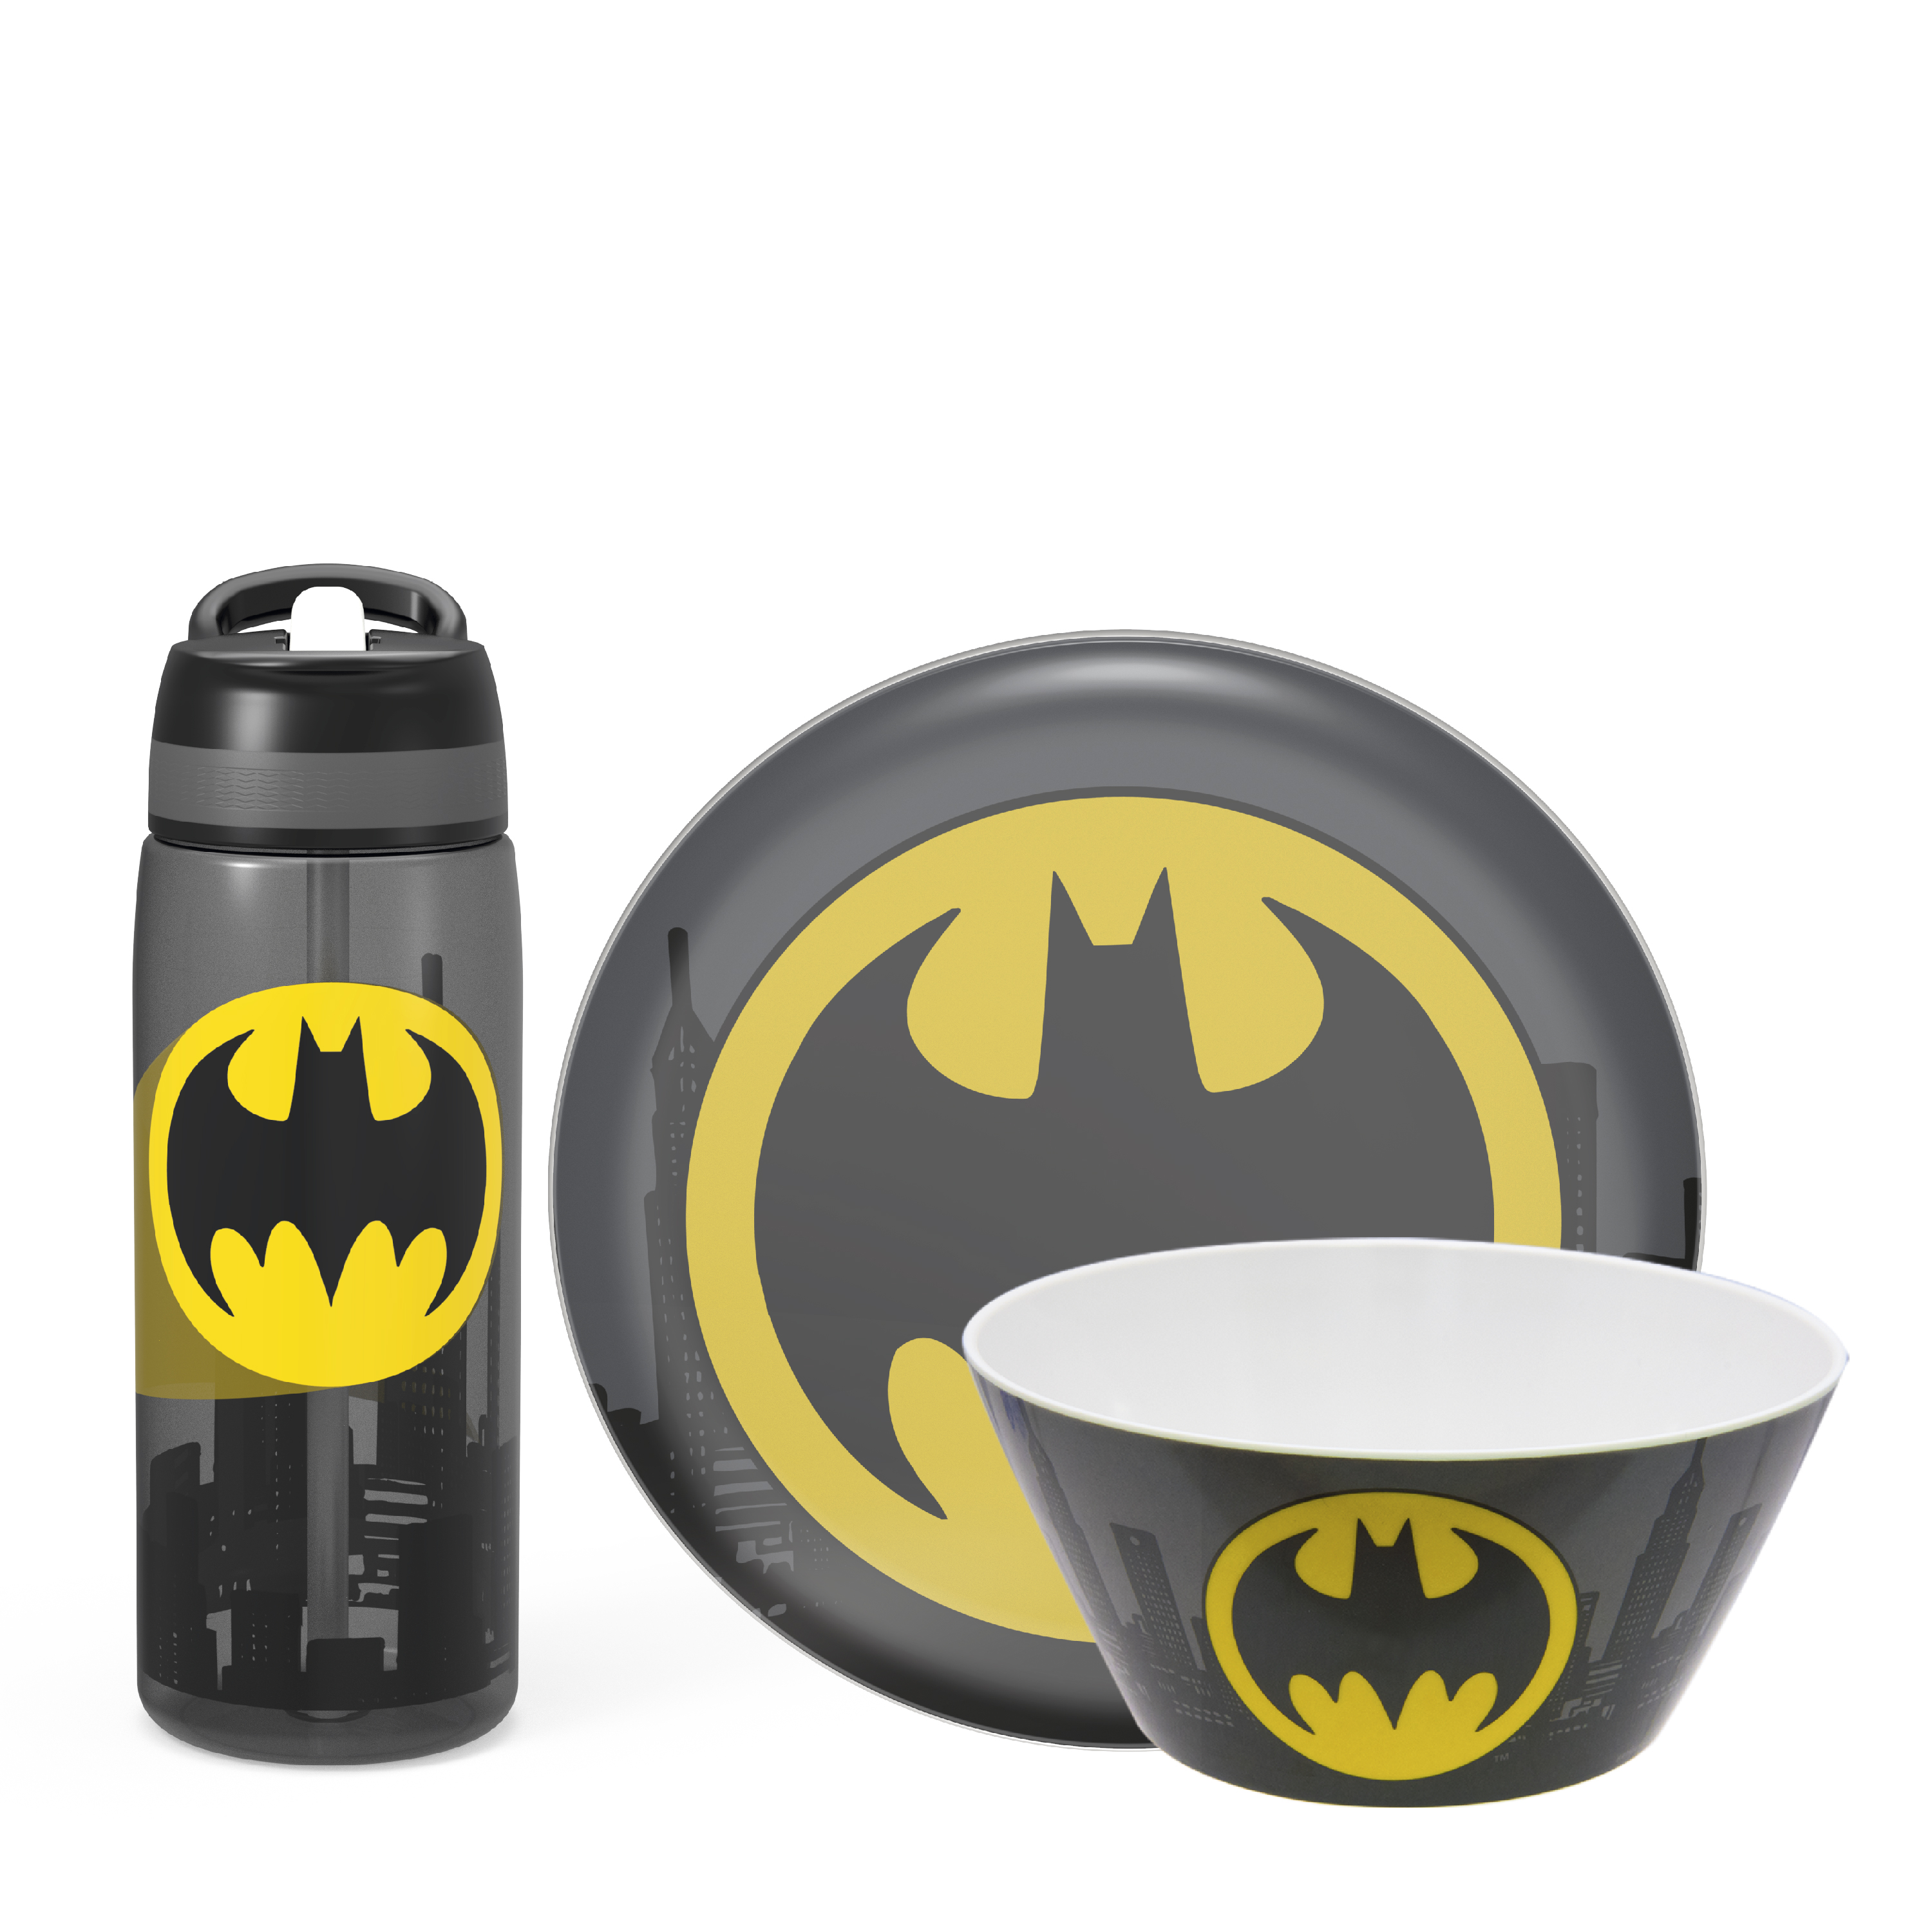 DC Comics Plate, Bowl and Water Bottle Dinnerware Set, Batman, 3-piece set slideshow image 1